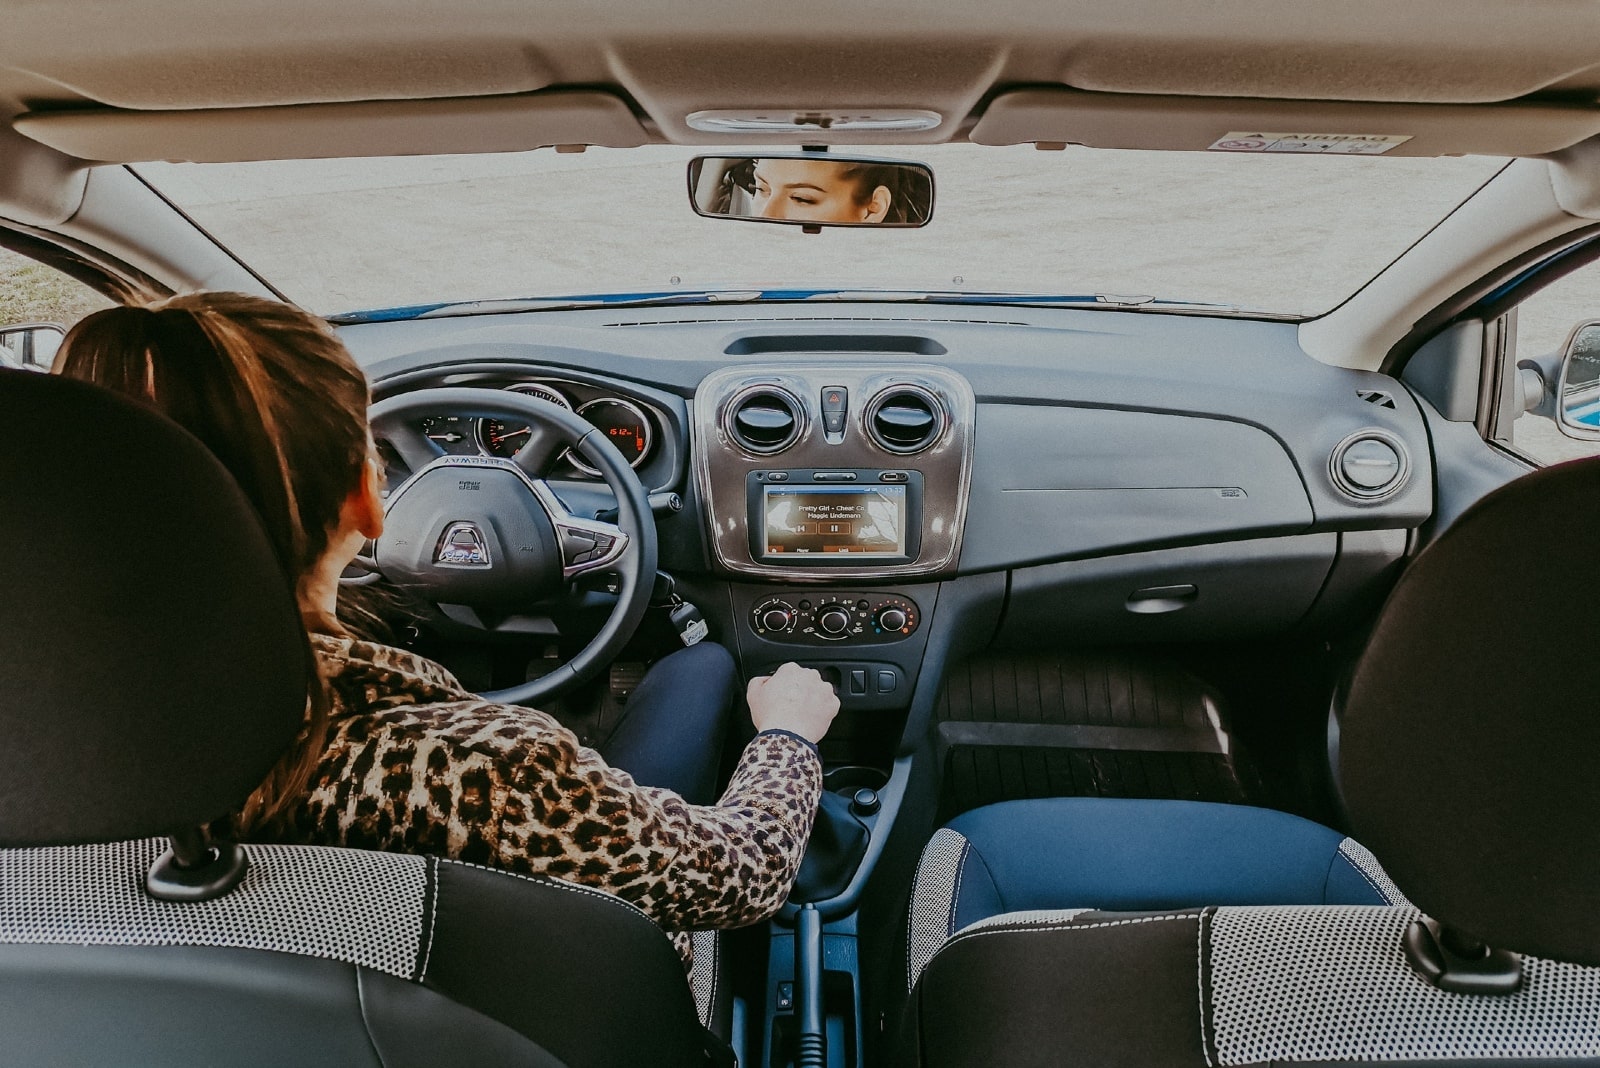 woman driving car during daytime